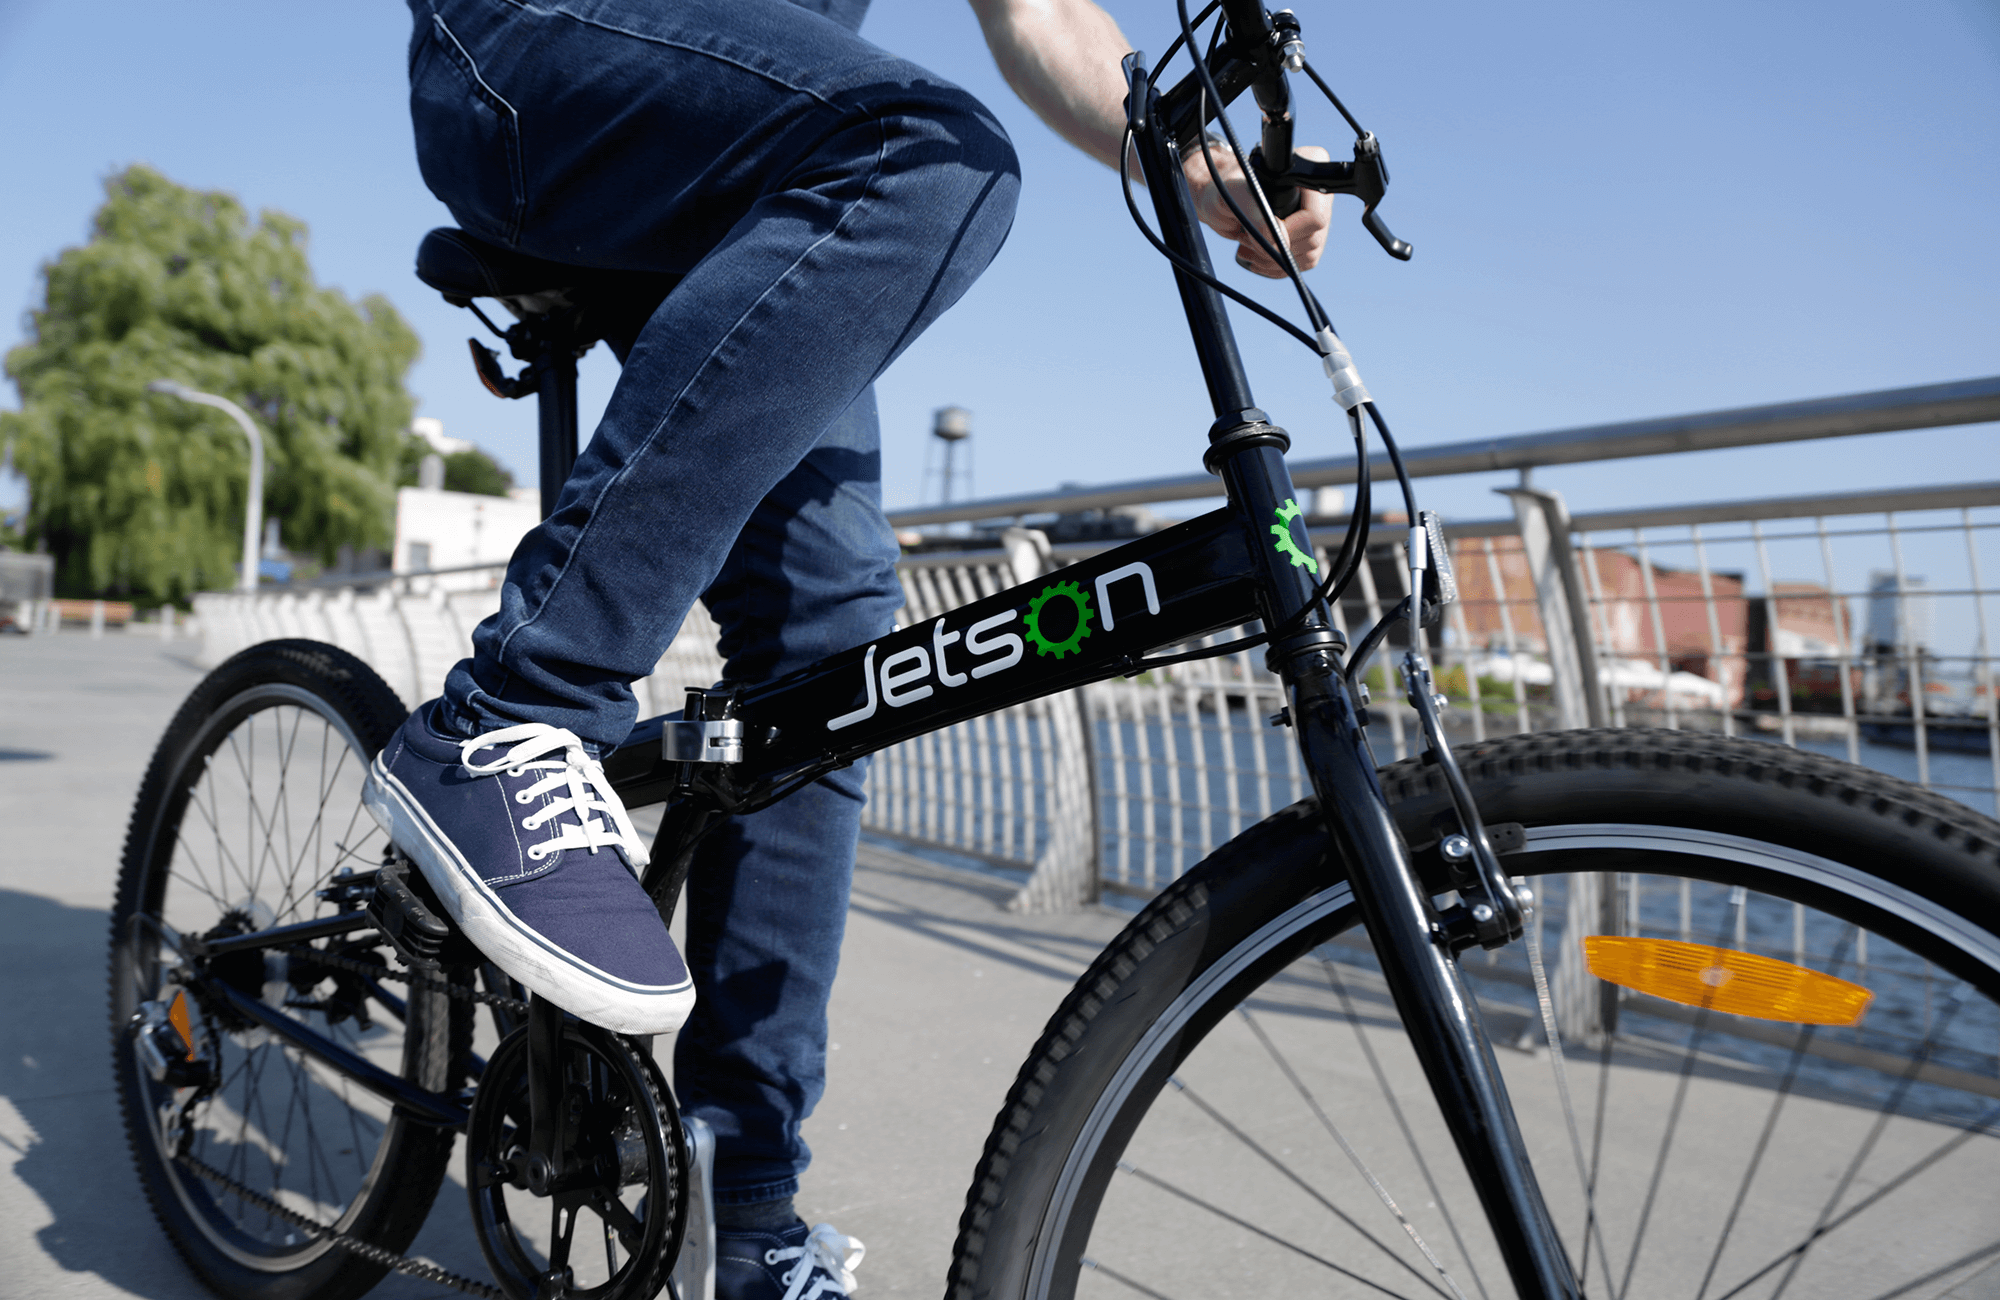 jetson bicycles